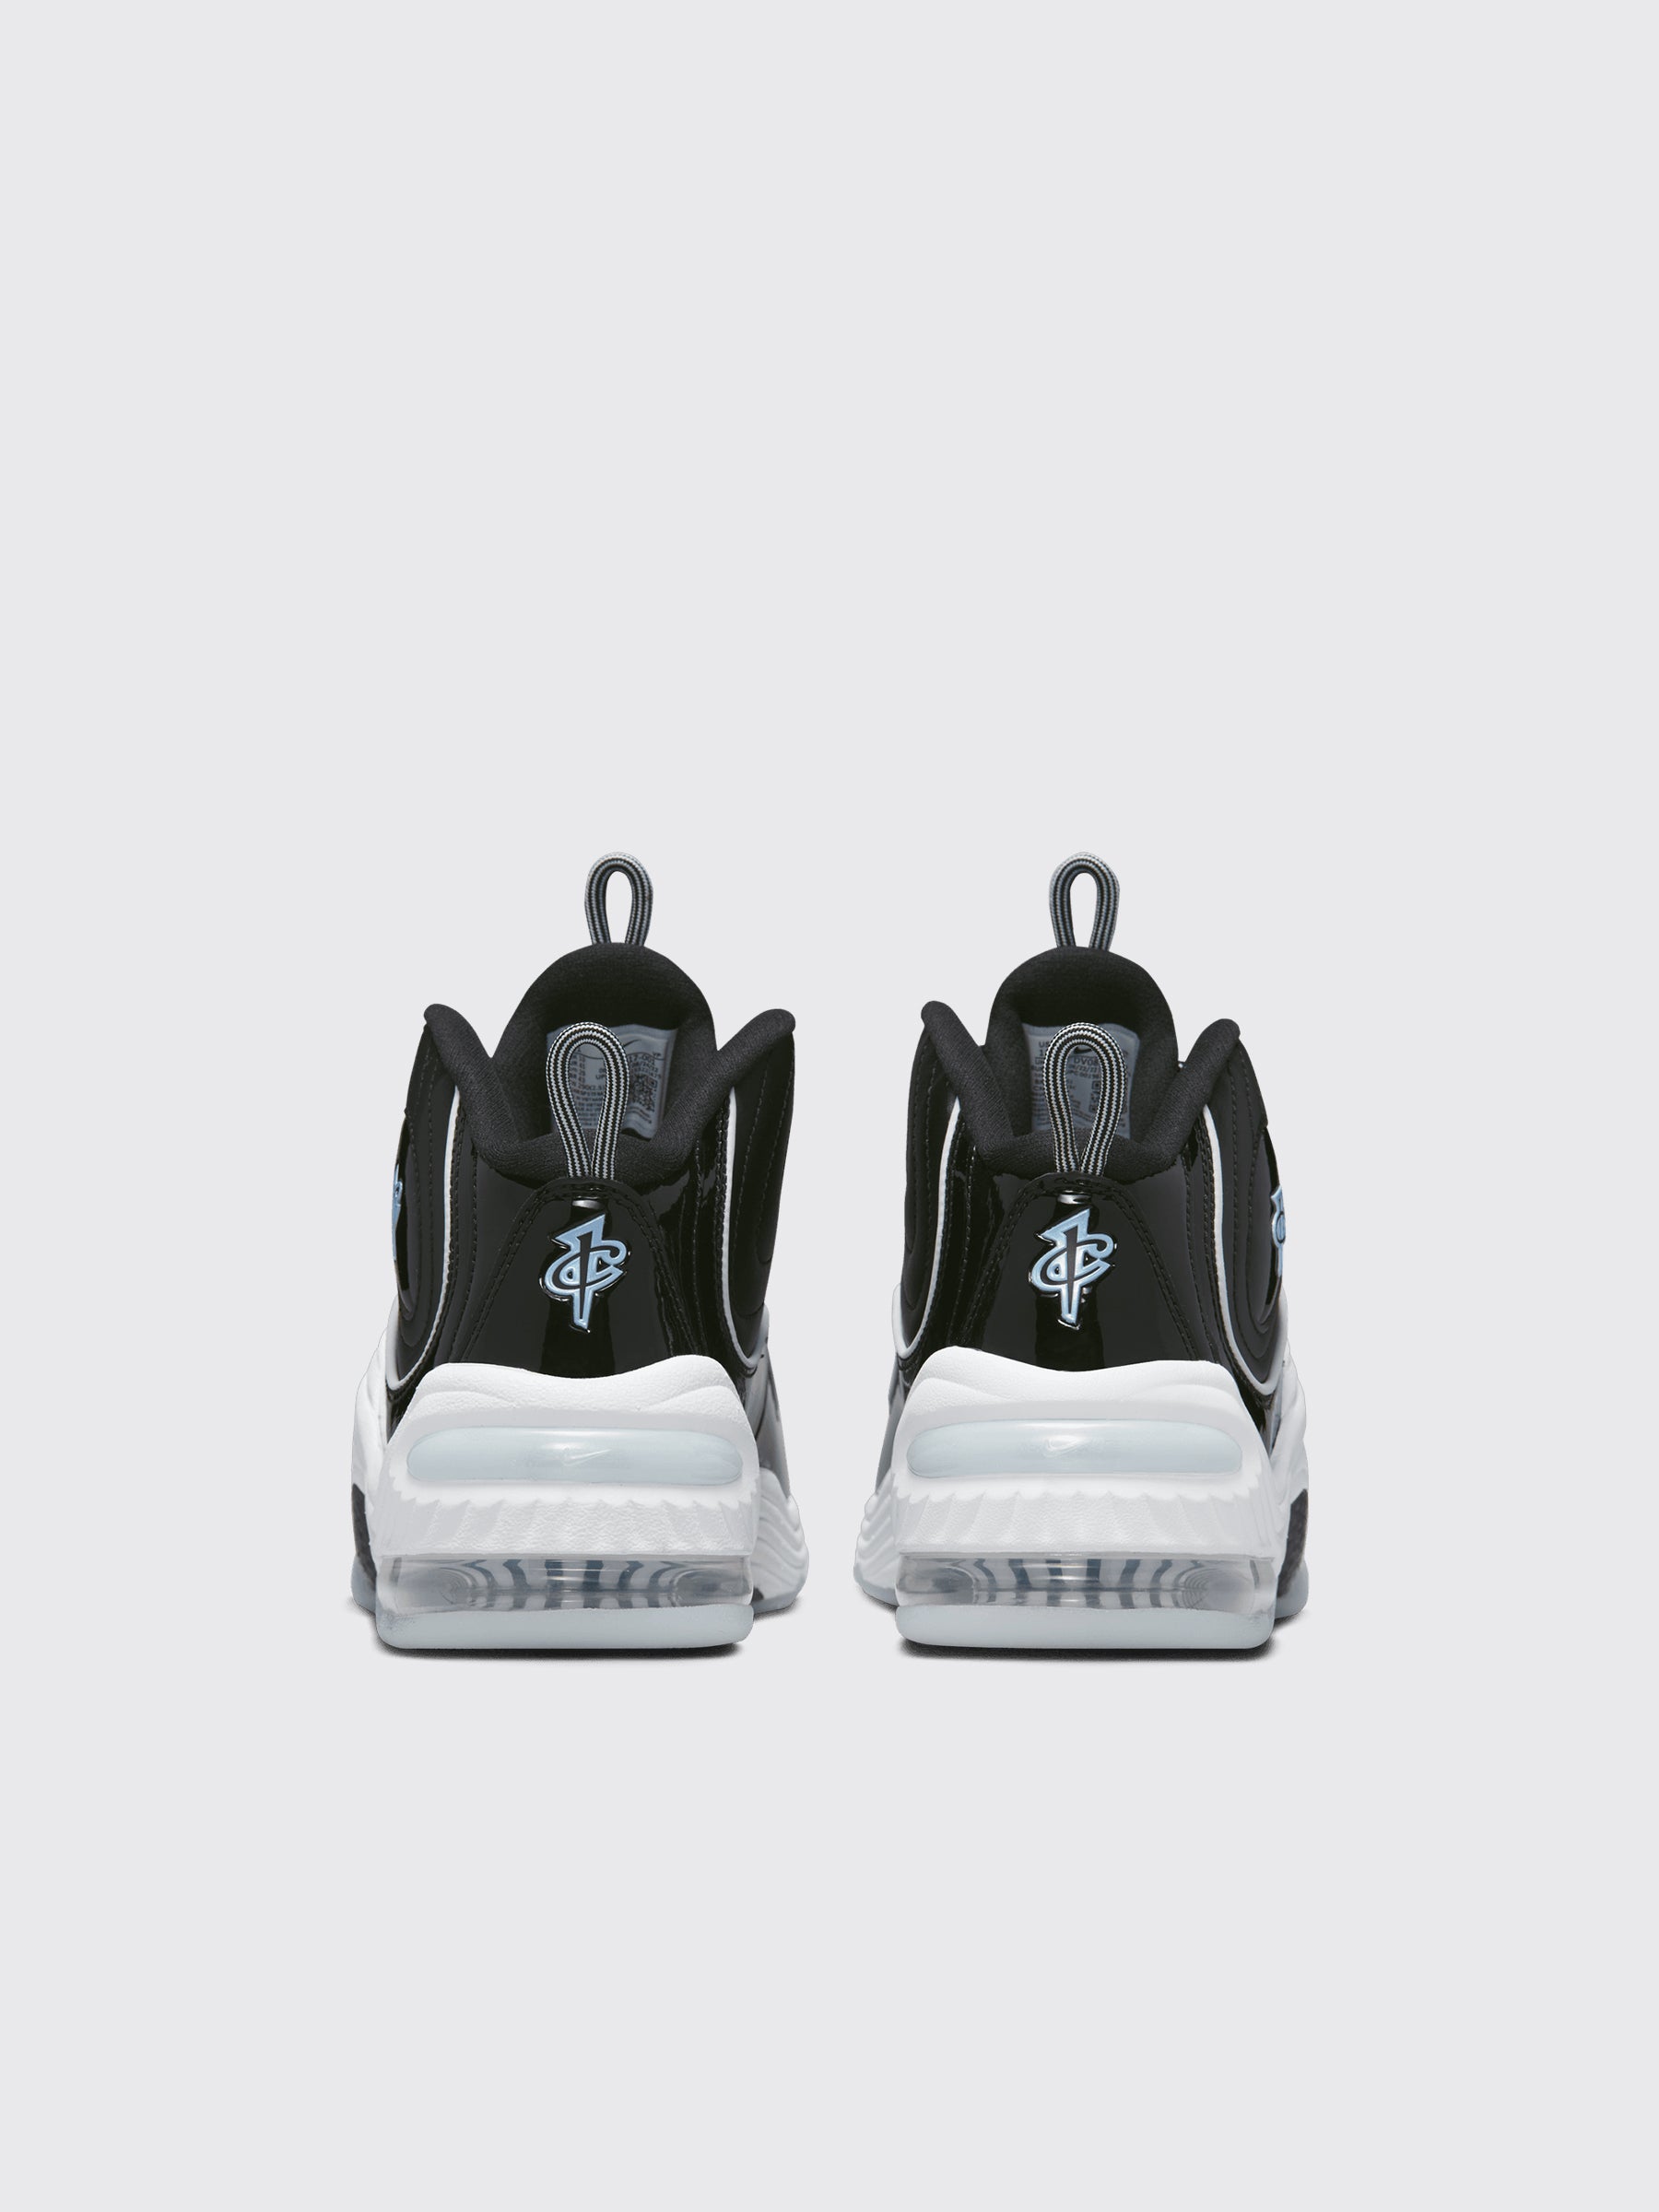 Nike Air Penny 2 Black / White